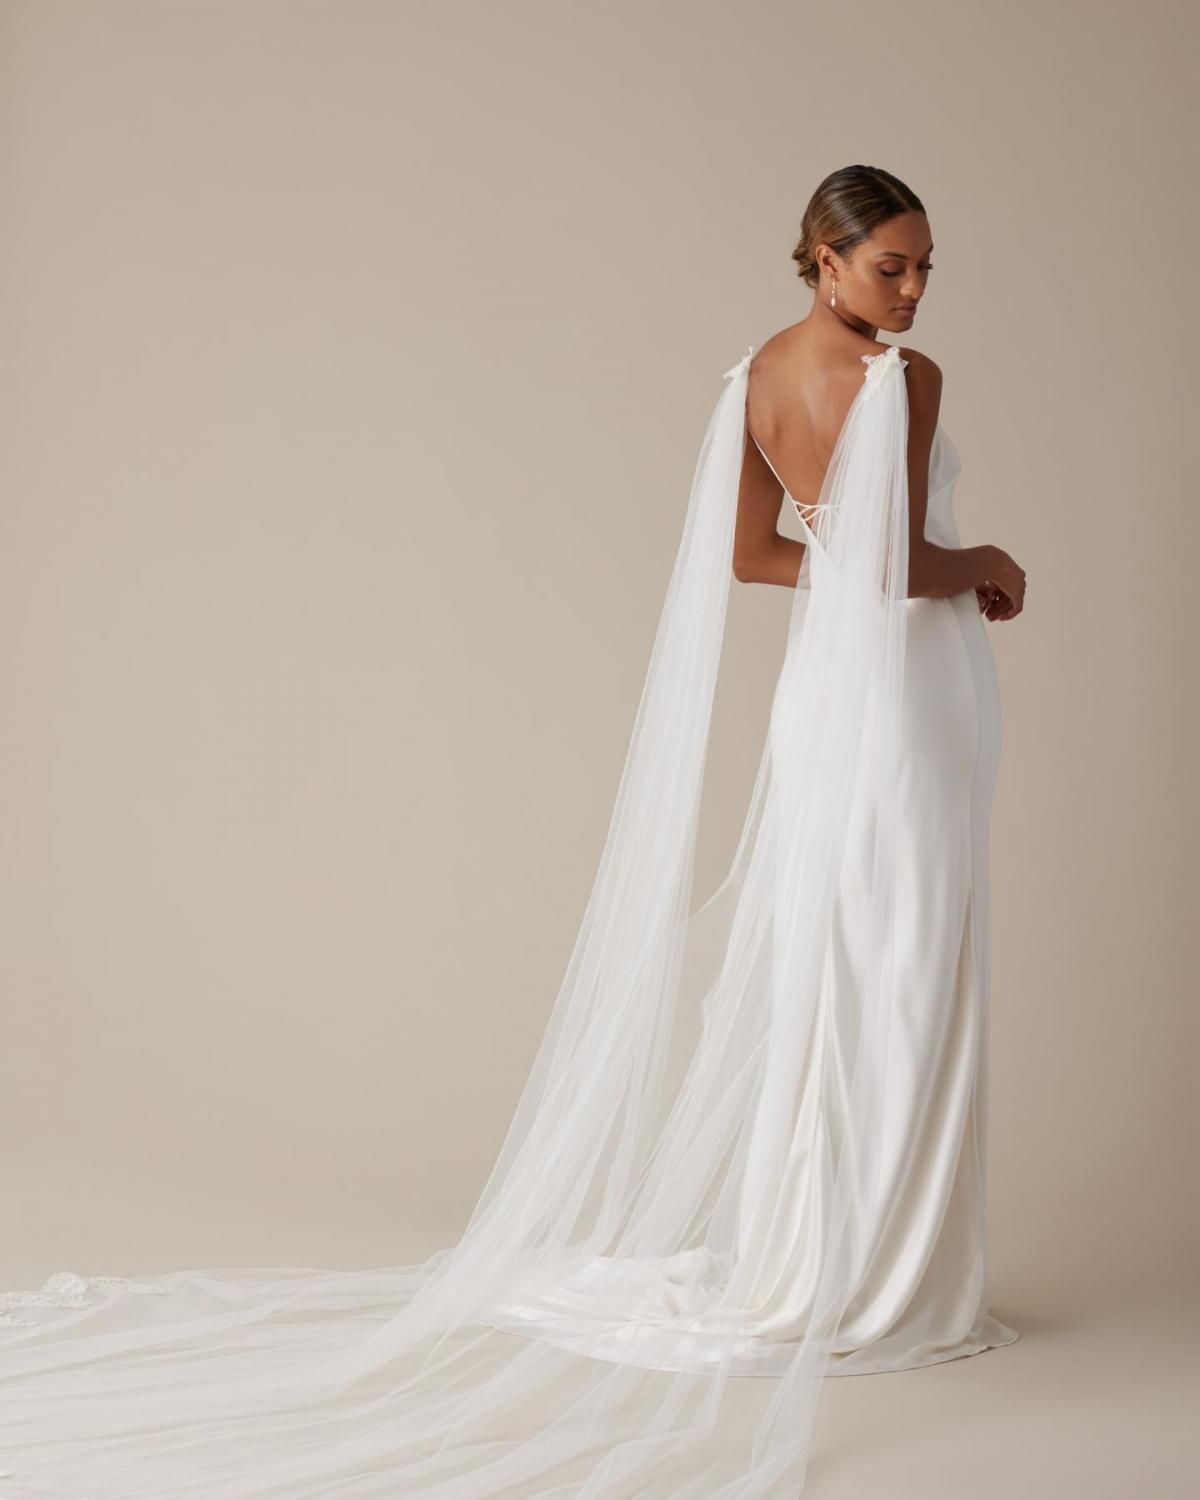 Wedding Veils | Bridal Veils | Long, Cathedral Veil Lengths